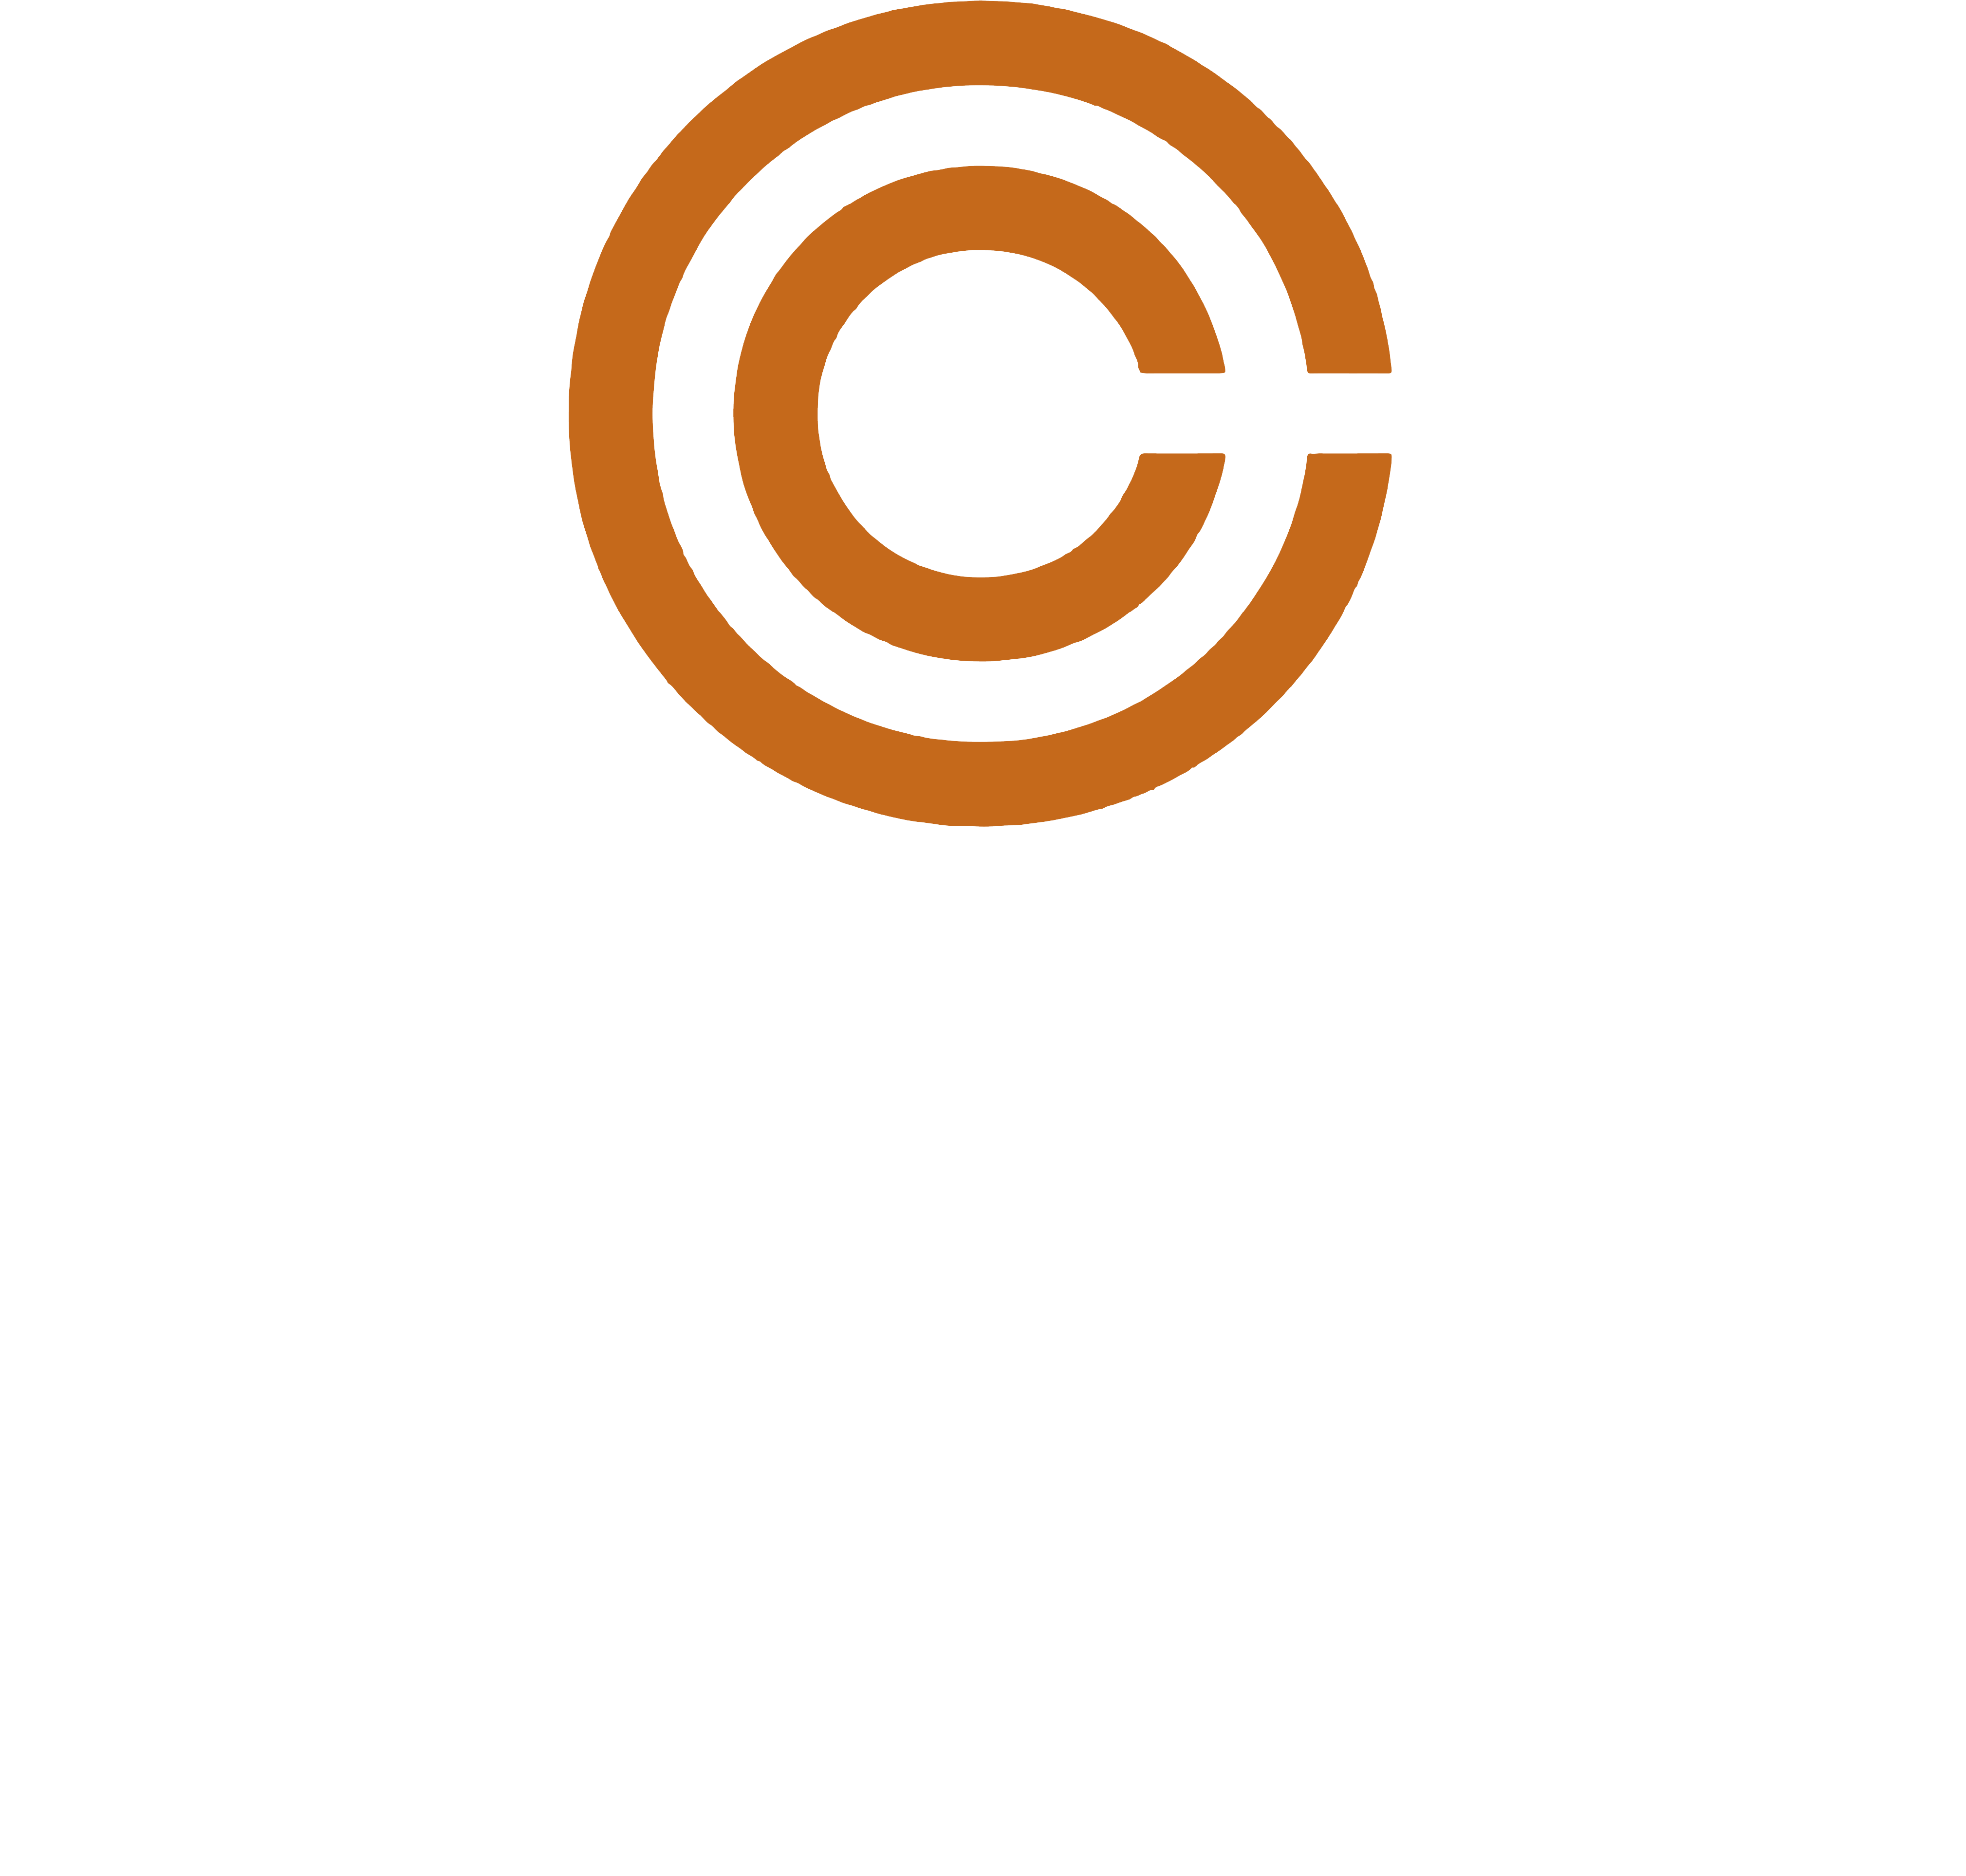 Center Chapel Church of Christ square logo